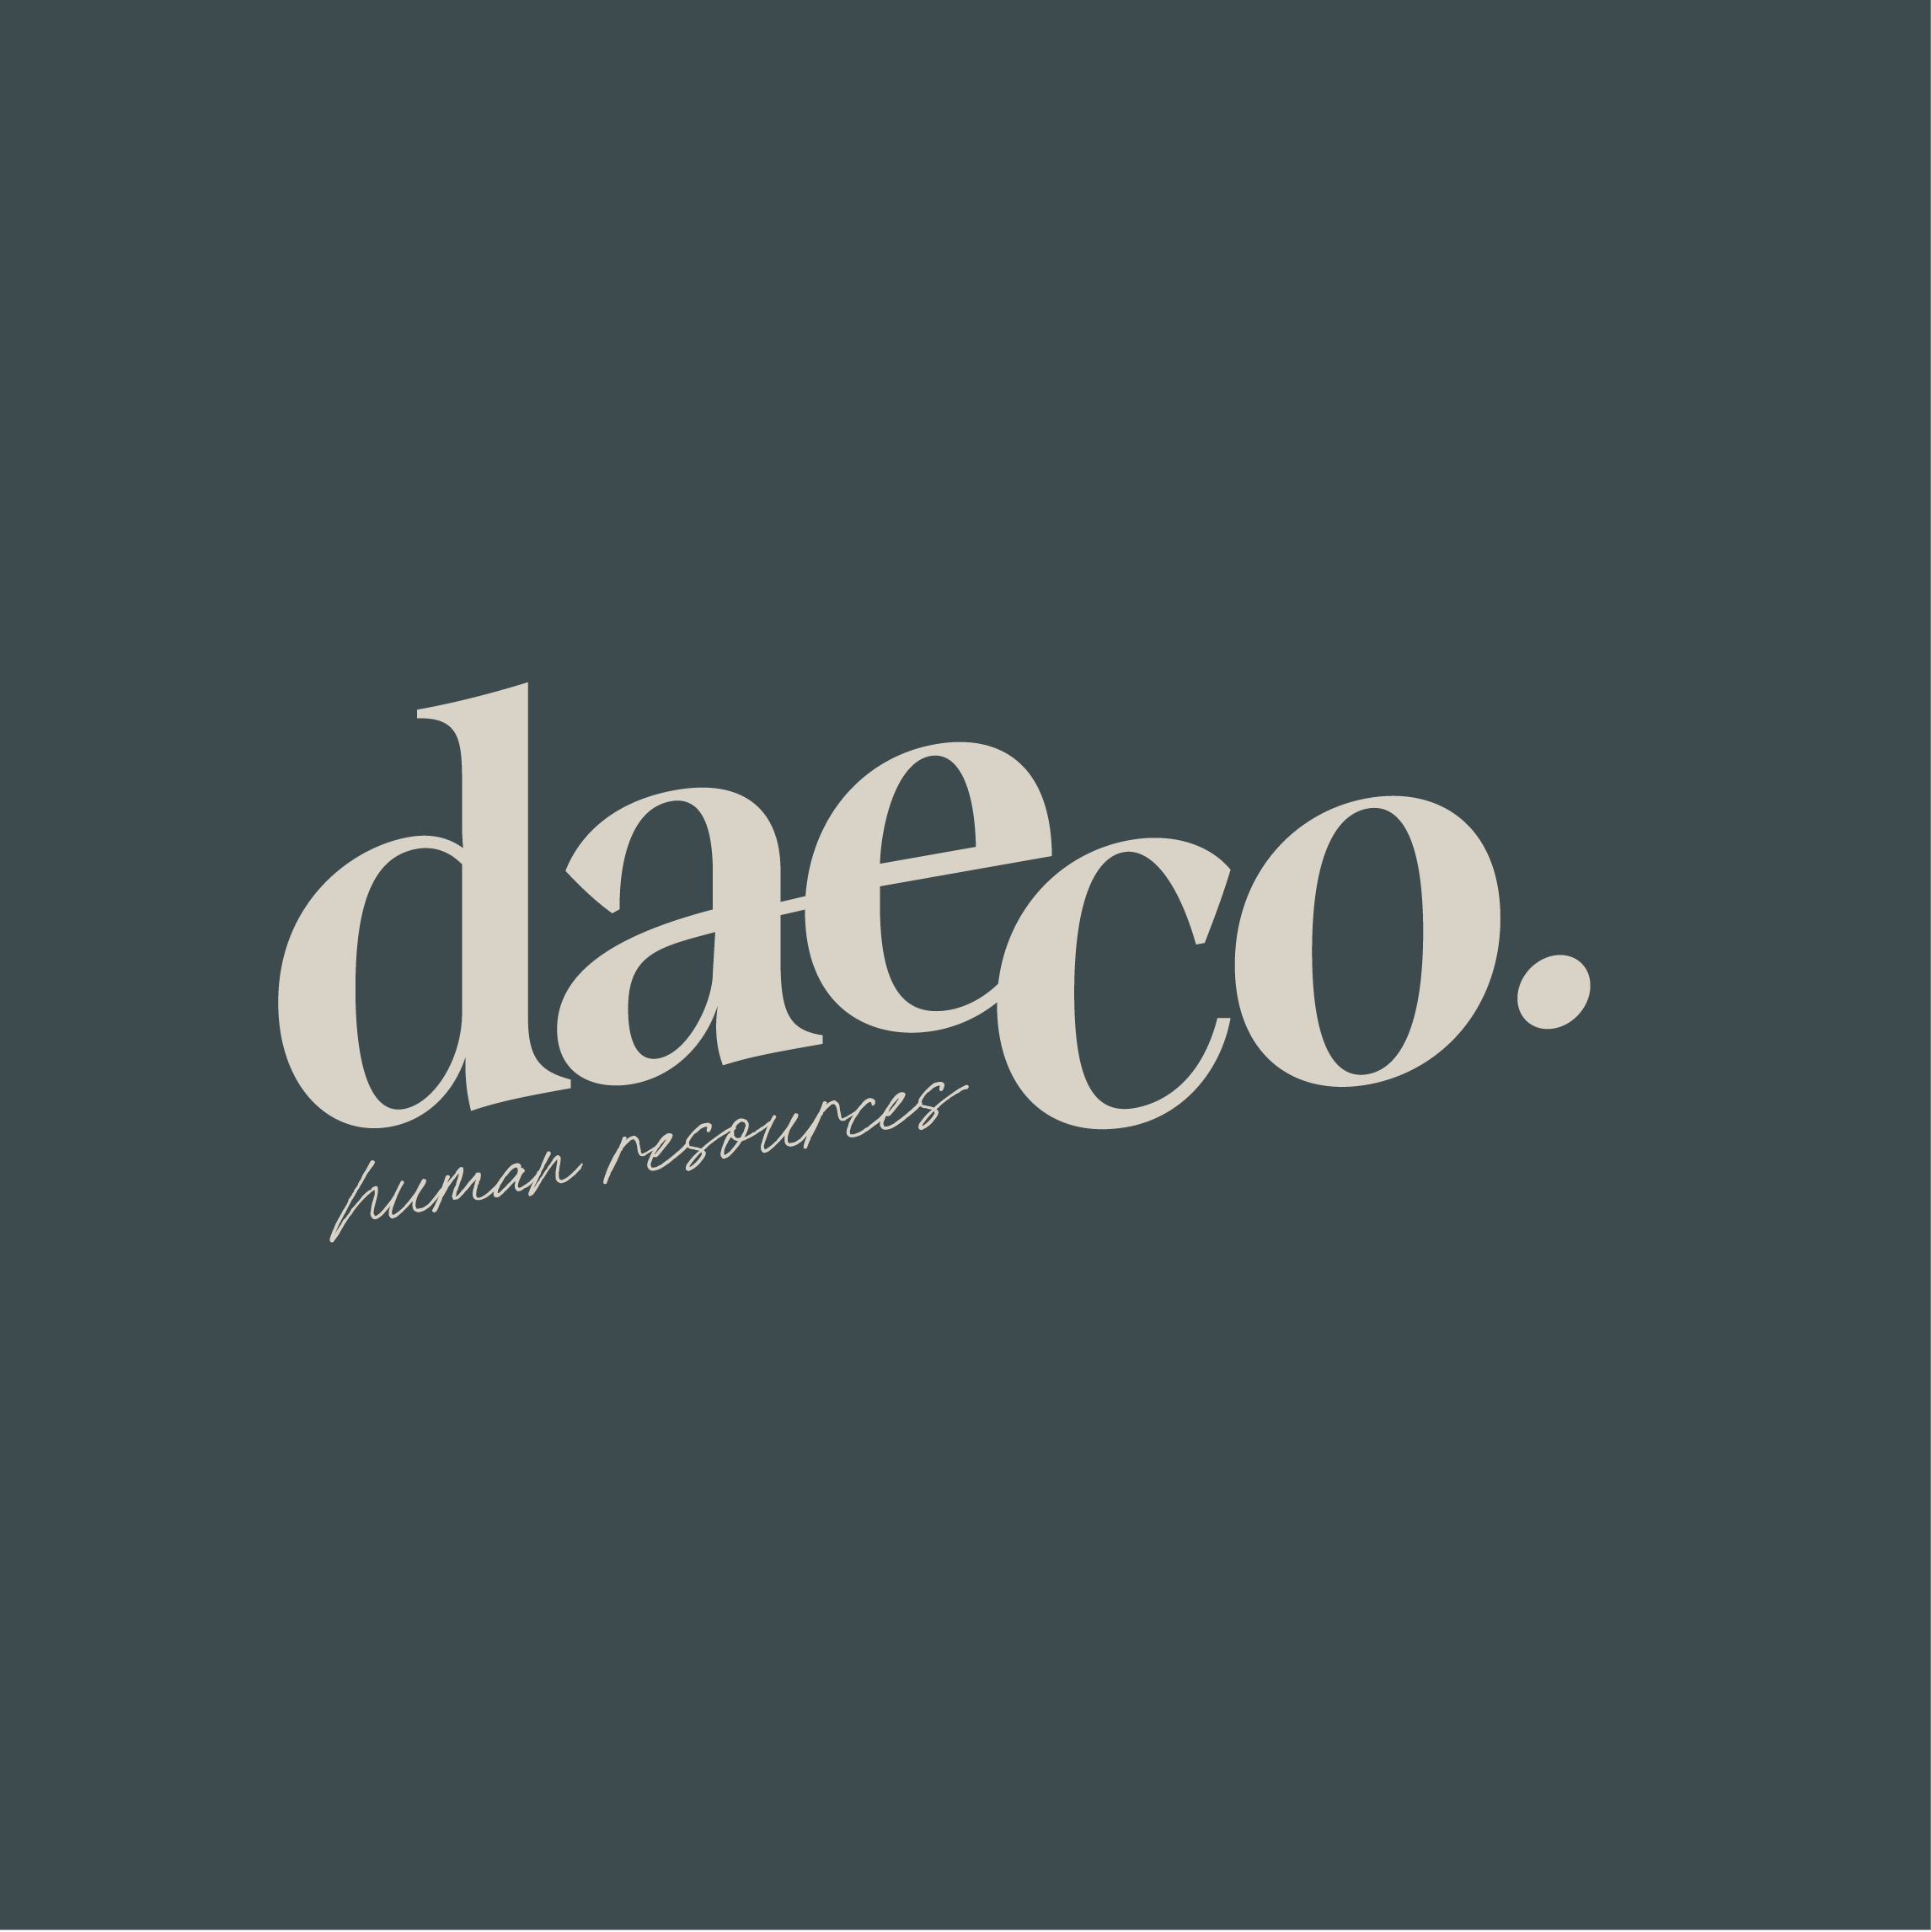 Daeco-SocialSample-Final-28.png